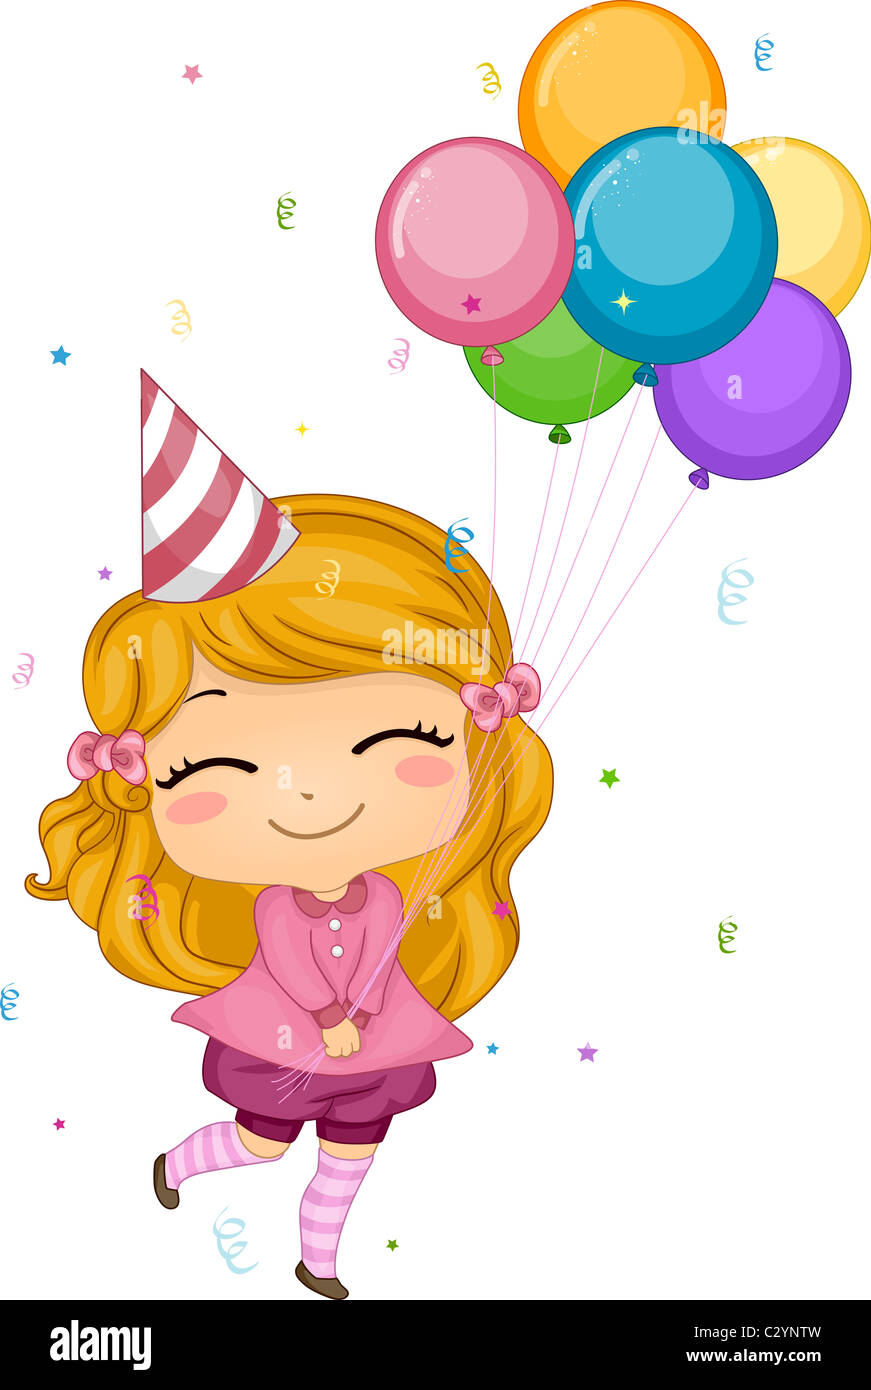 Illustration of a Girl Holding Birthday Balloons Stock Photo - Alamy